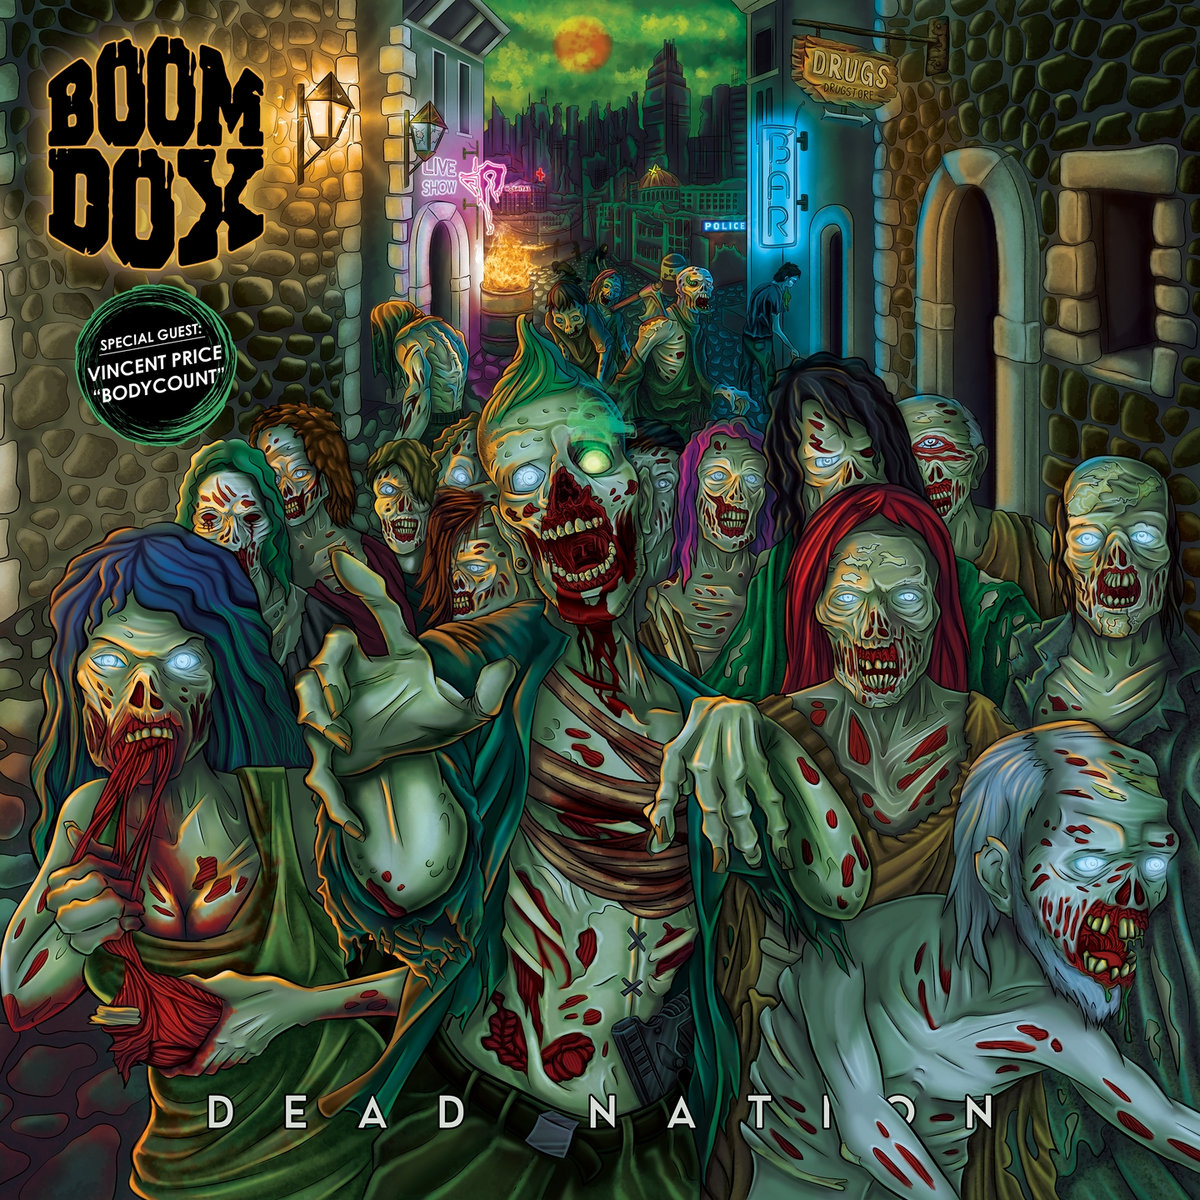 Boom Dox - Dead Nation (2021)